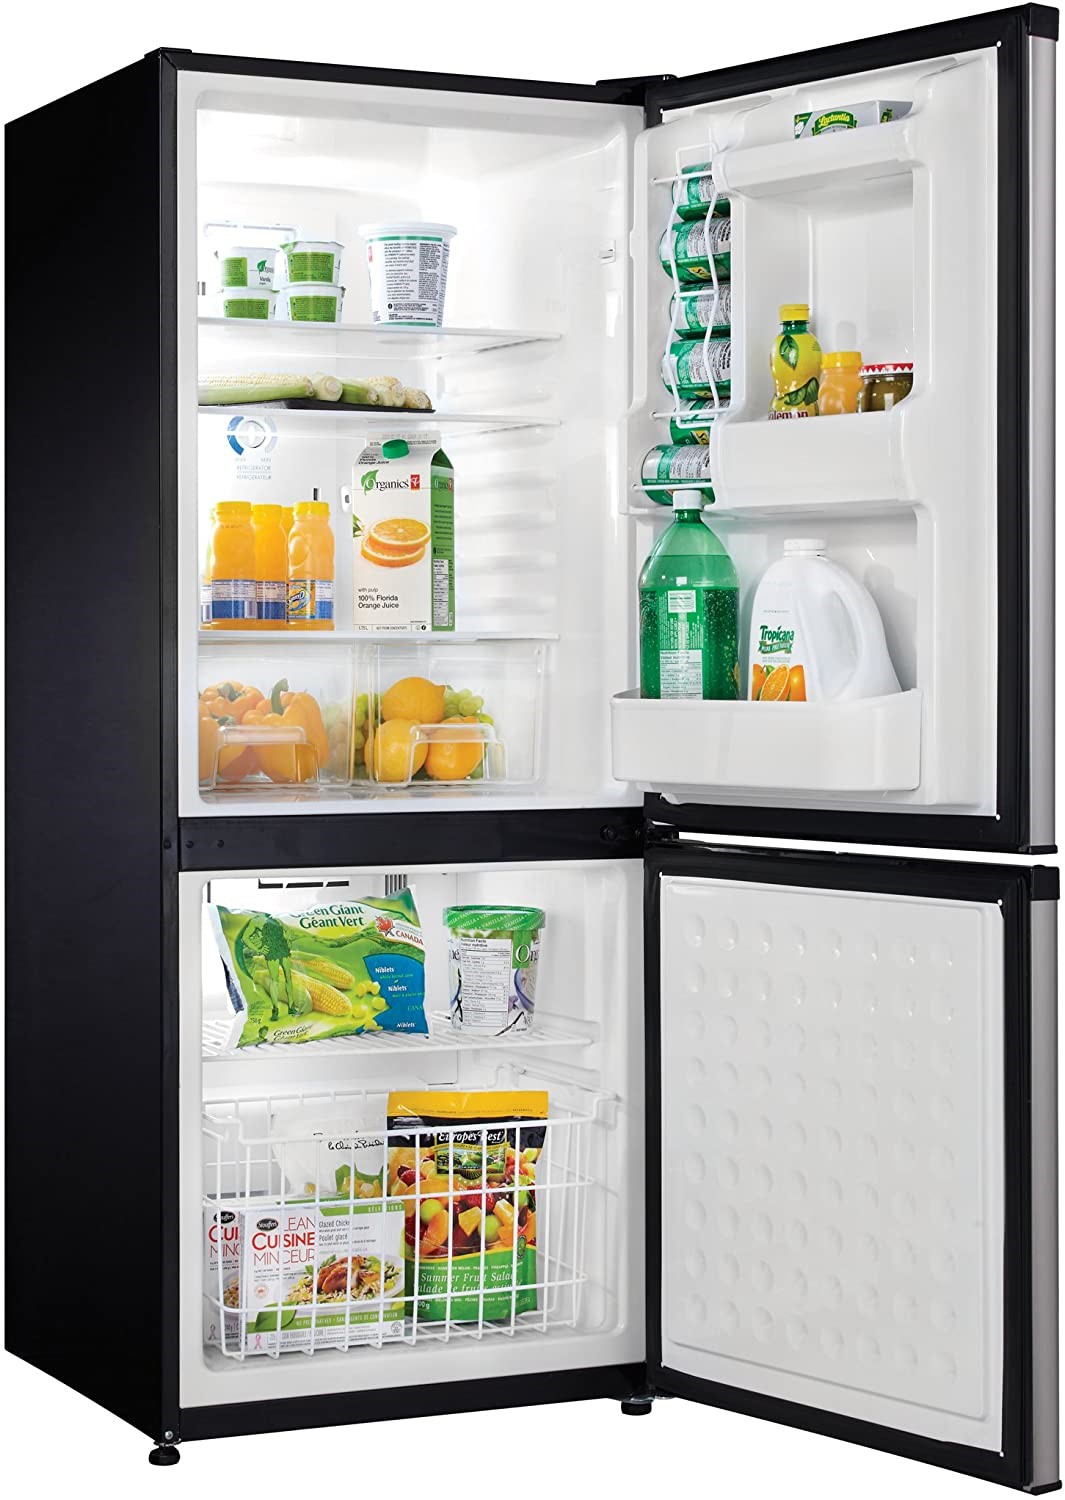 Best Bottom Freezer Refrigerators of 2020